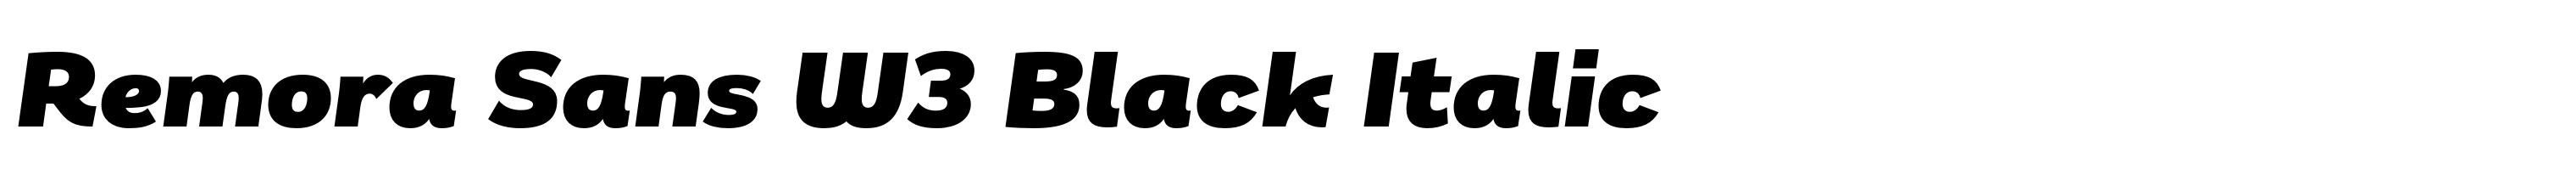 Remora Sans W3 Black Italic